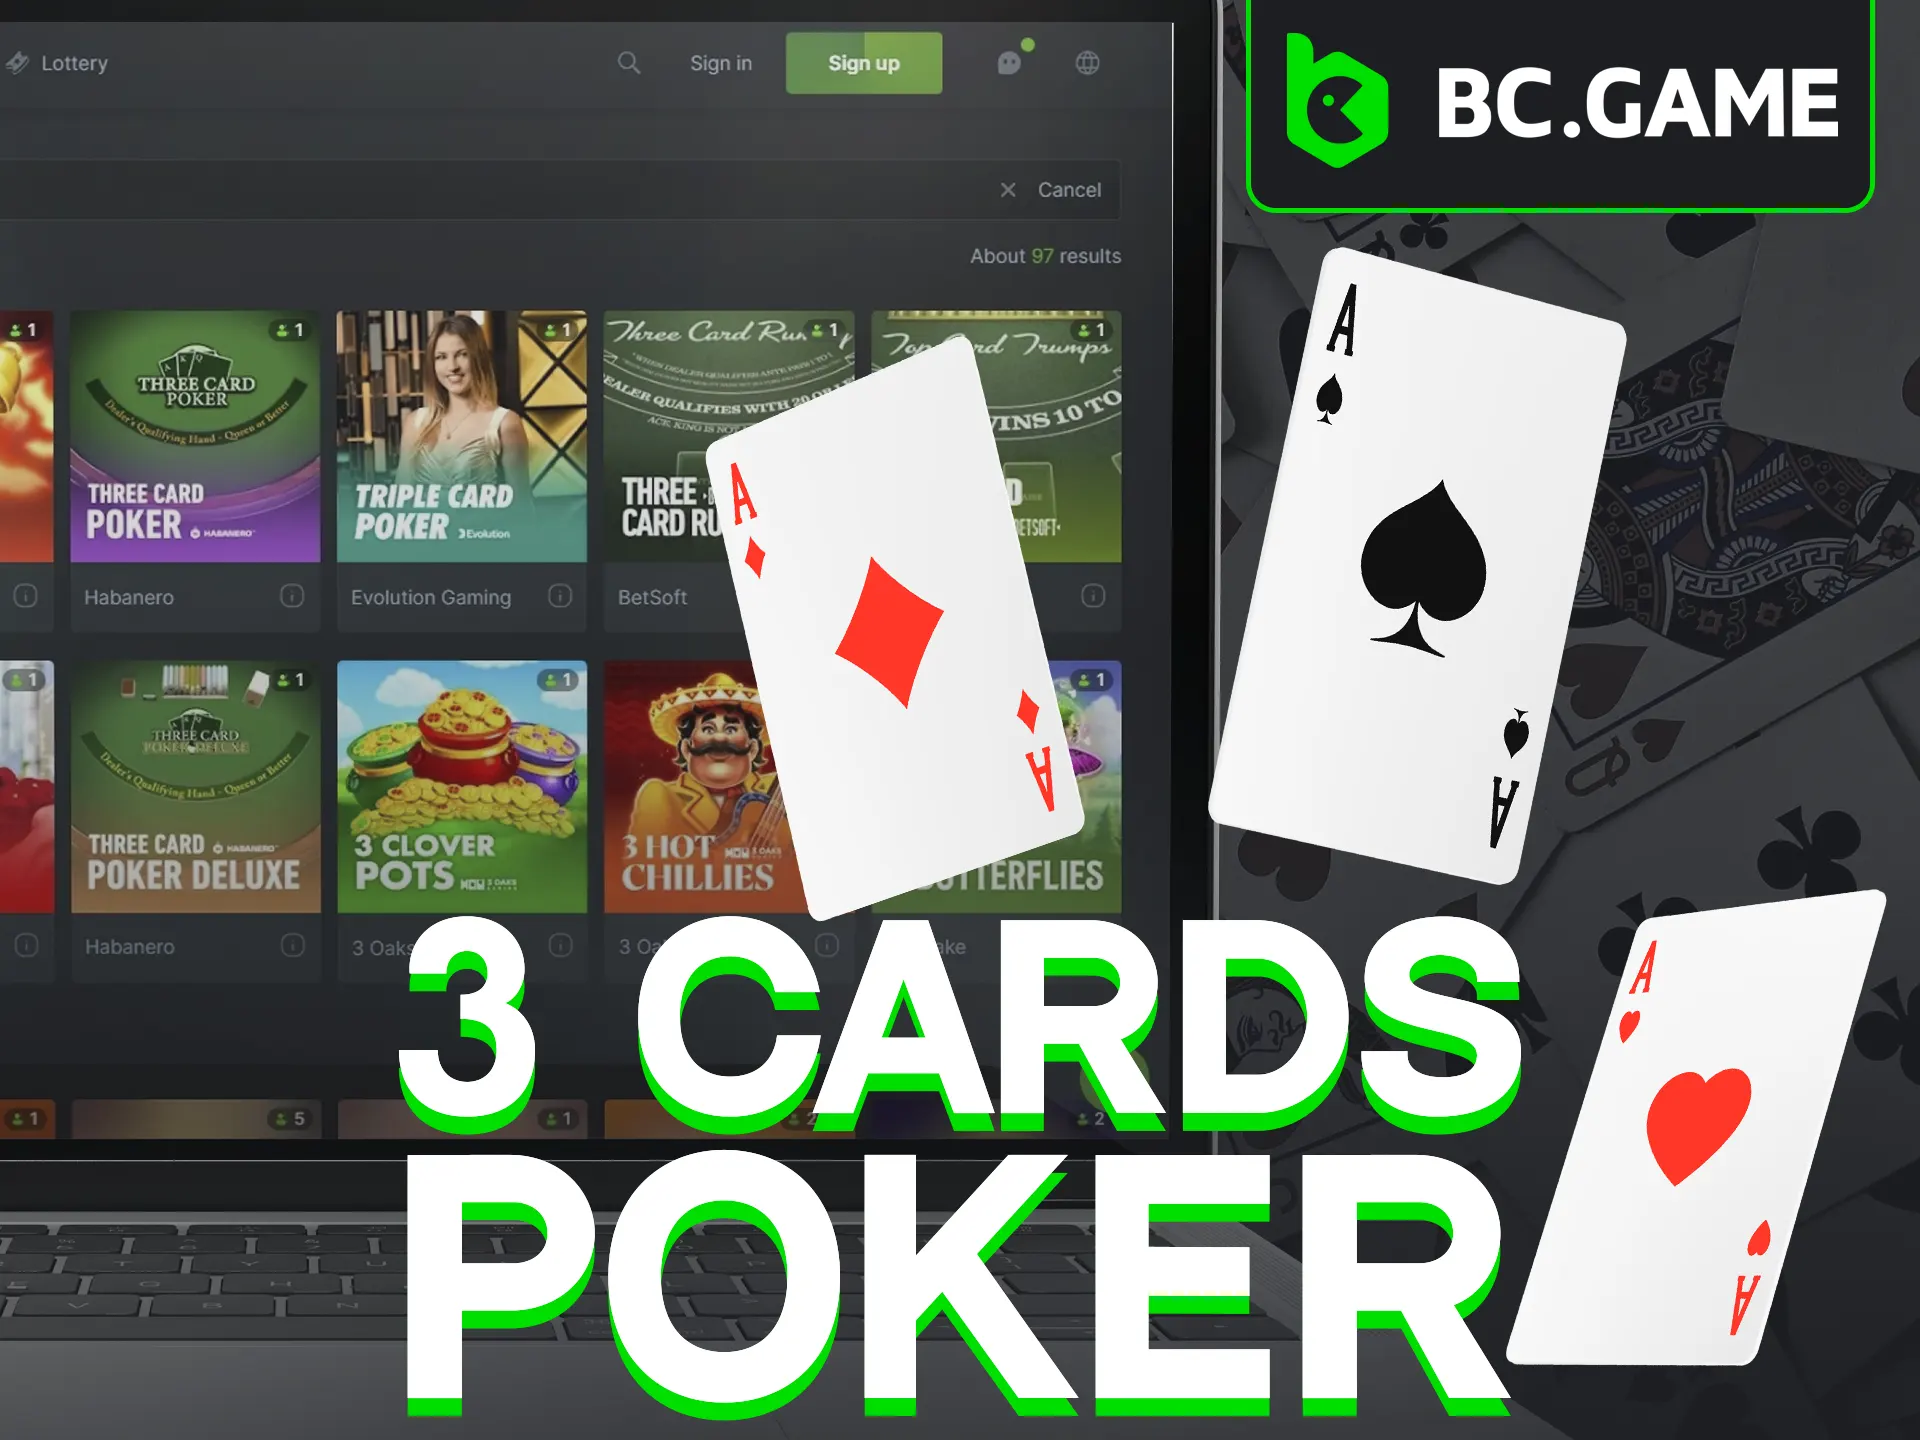 Play simplified 3 Card Poker at BC Game.